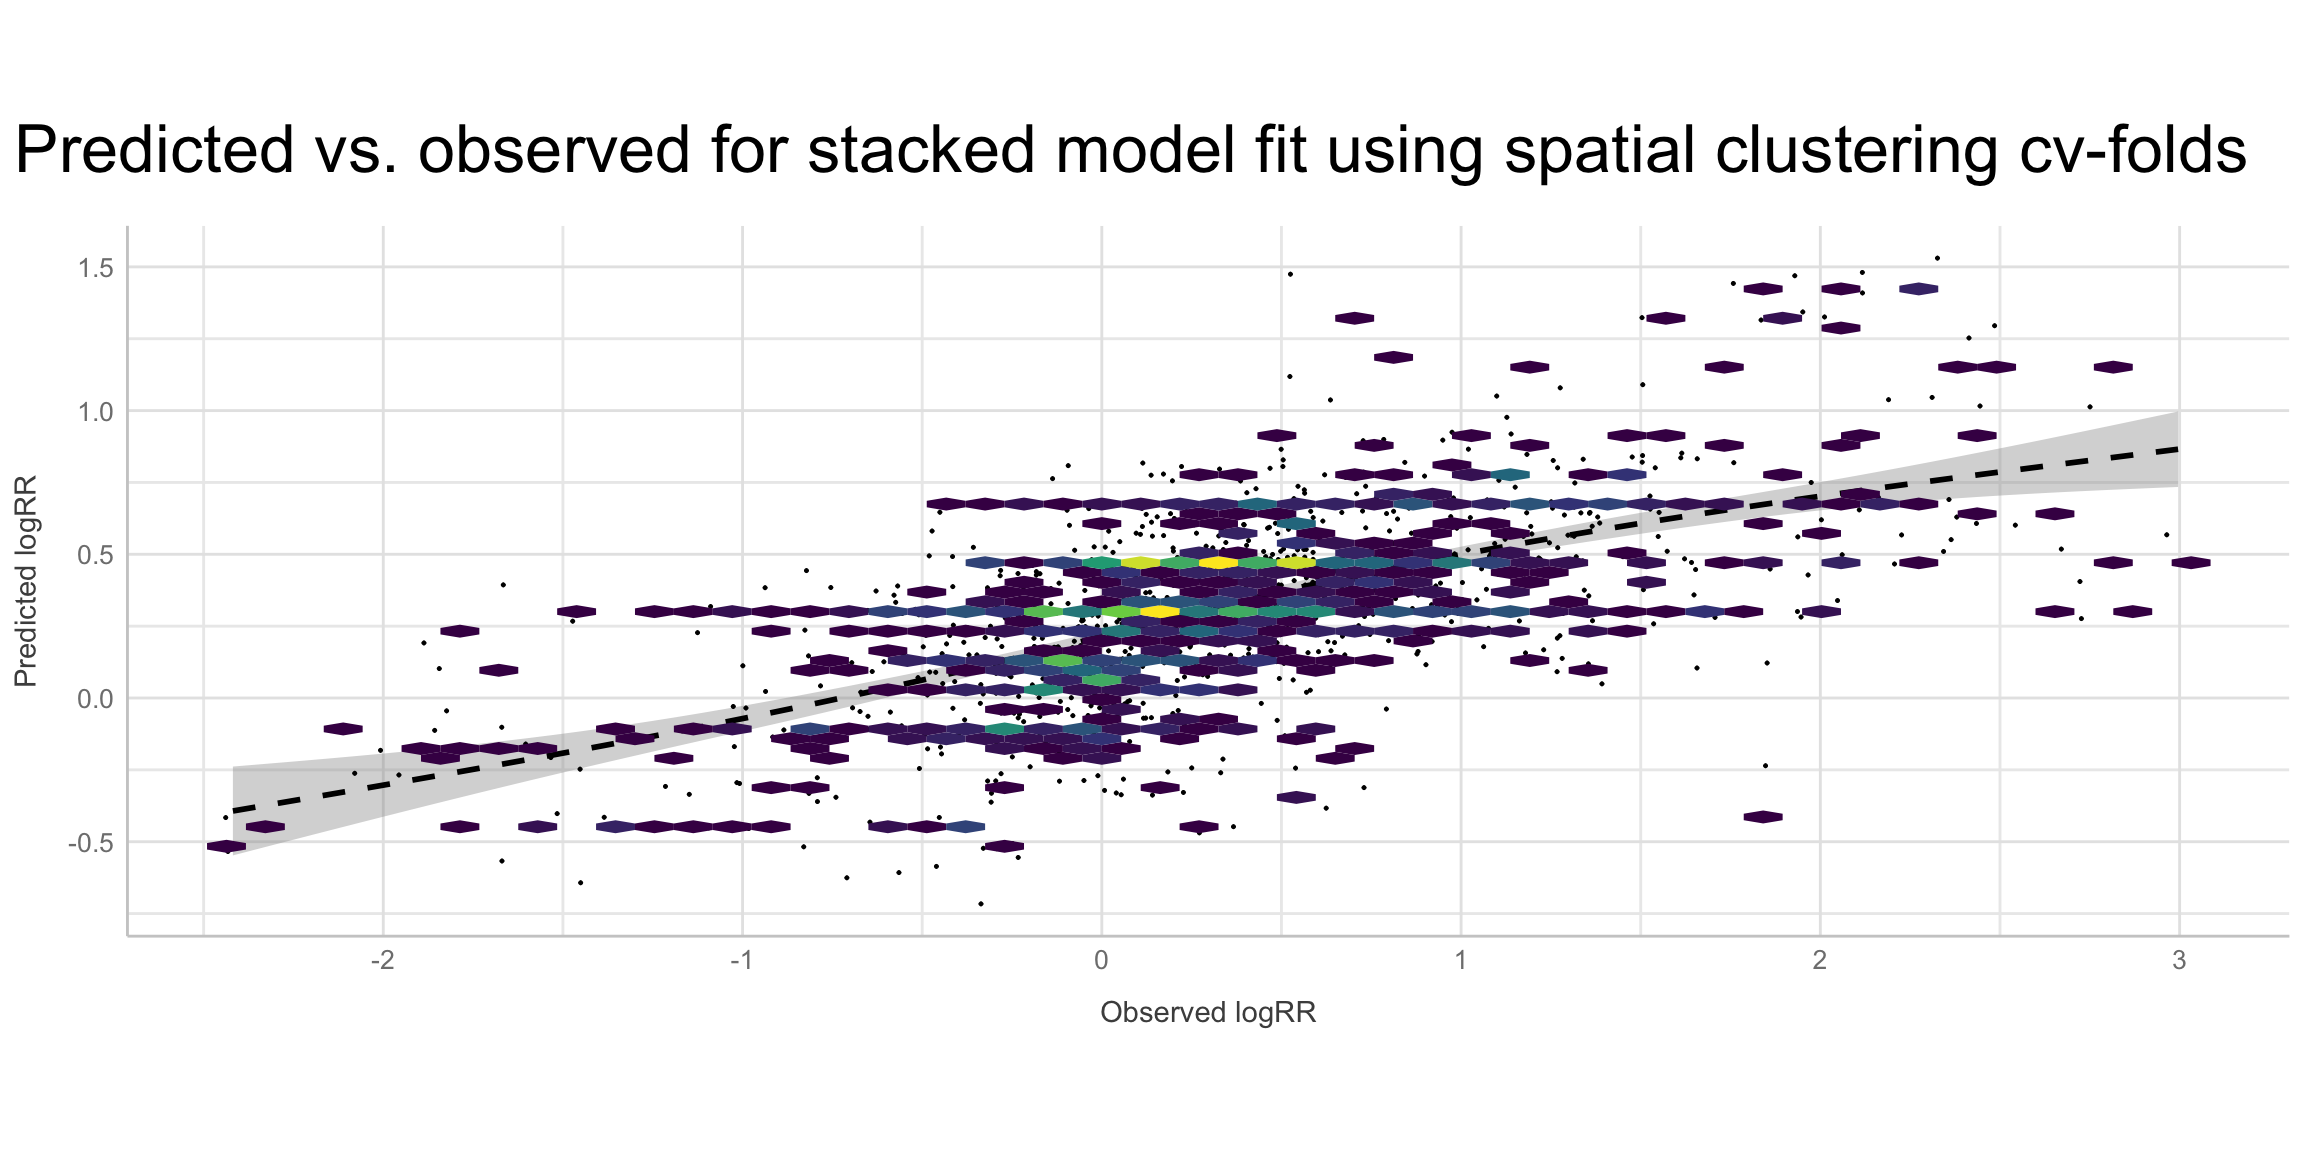 Predicted vs. observed for the stacked model, resampling: Spatial clustering cv-folds